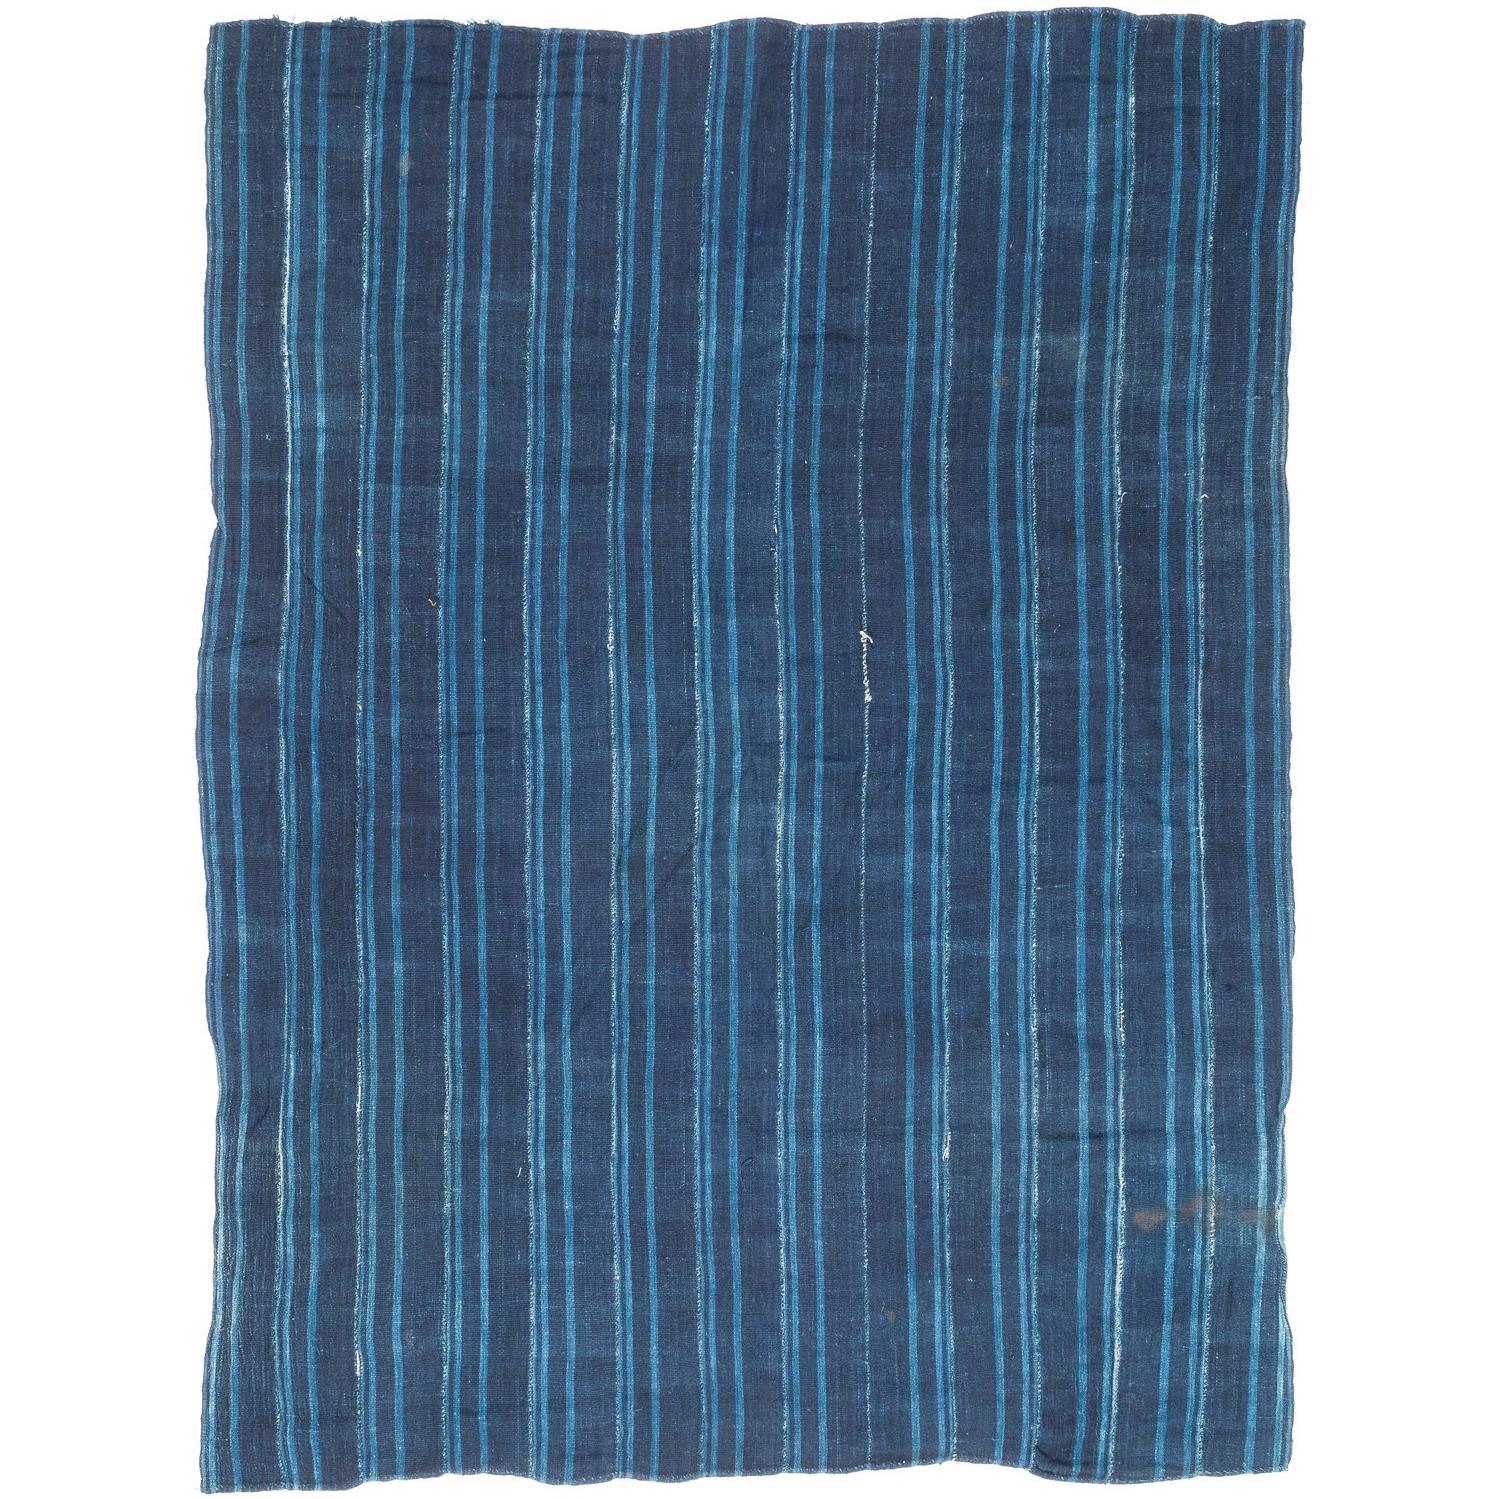 Vintage African Indigo Blue Hand Dyed Cotton Wrap Textile